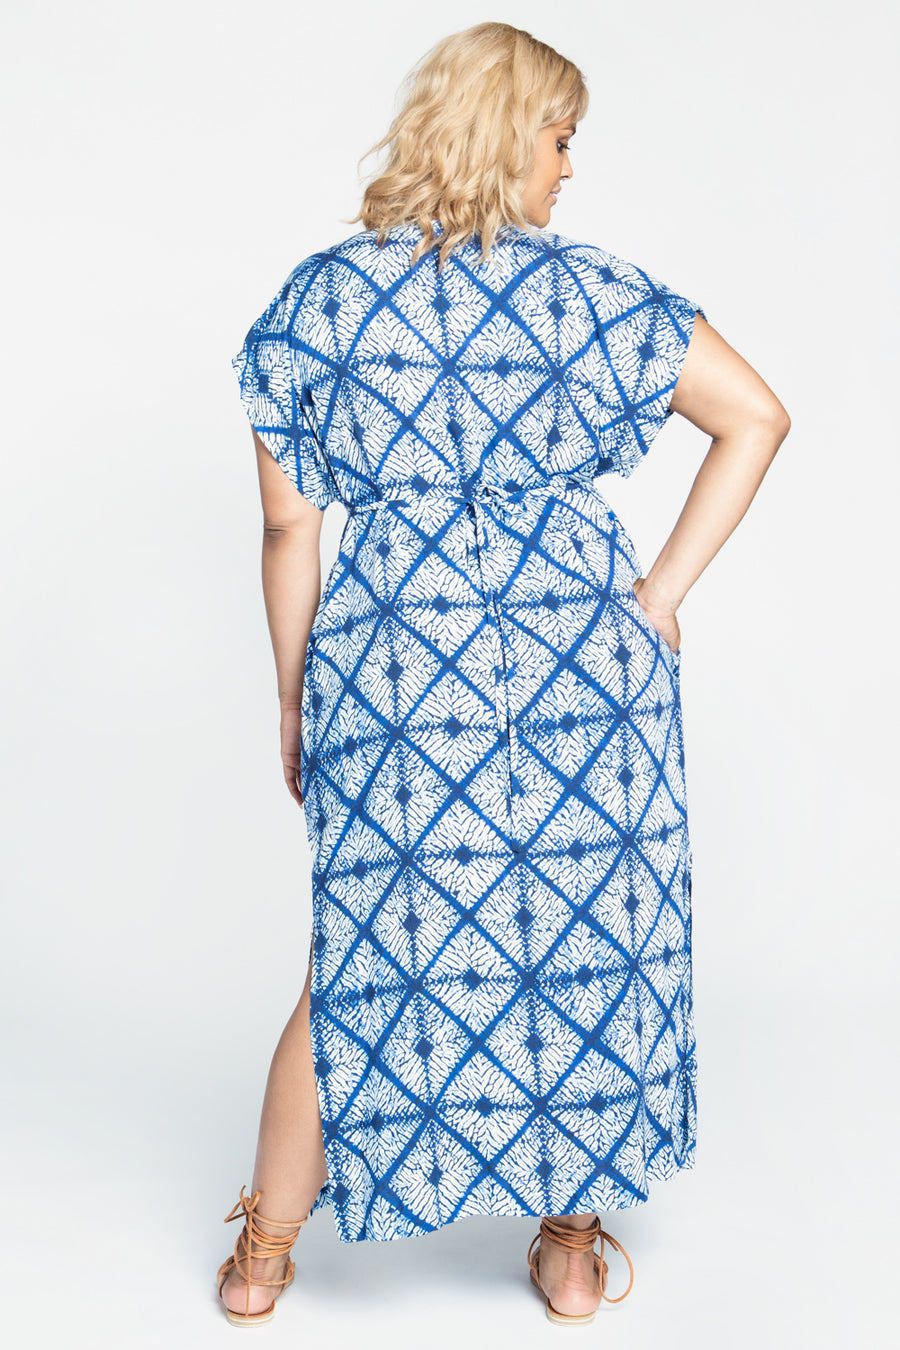 Charlie Caftan pattern / Kaftan Pattern| Plus size dress pattern | by Closet Core Patterns